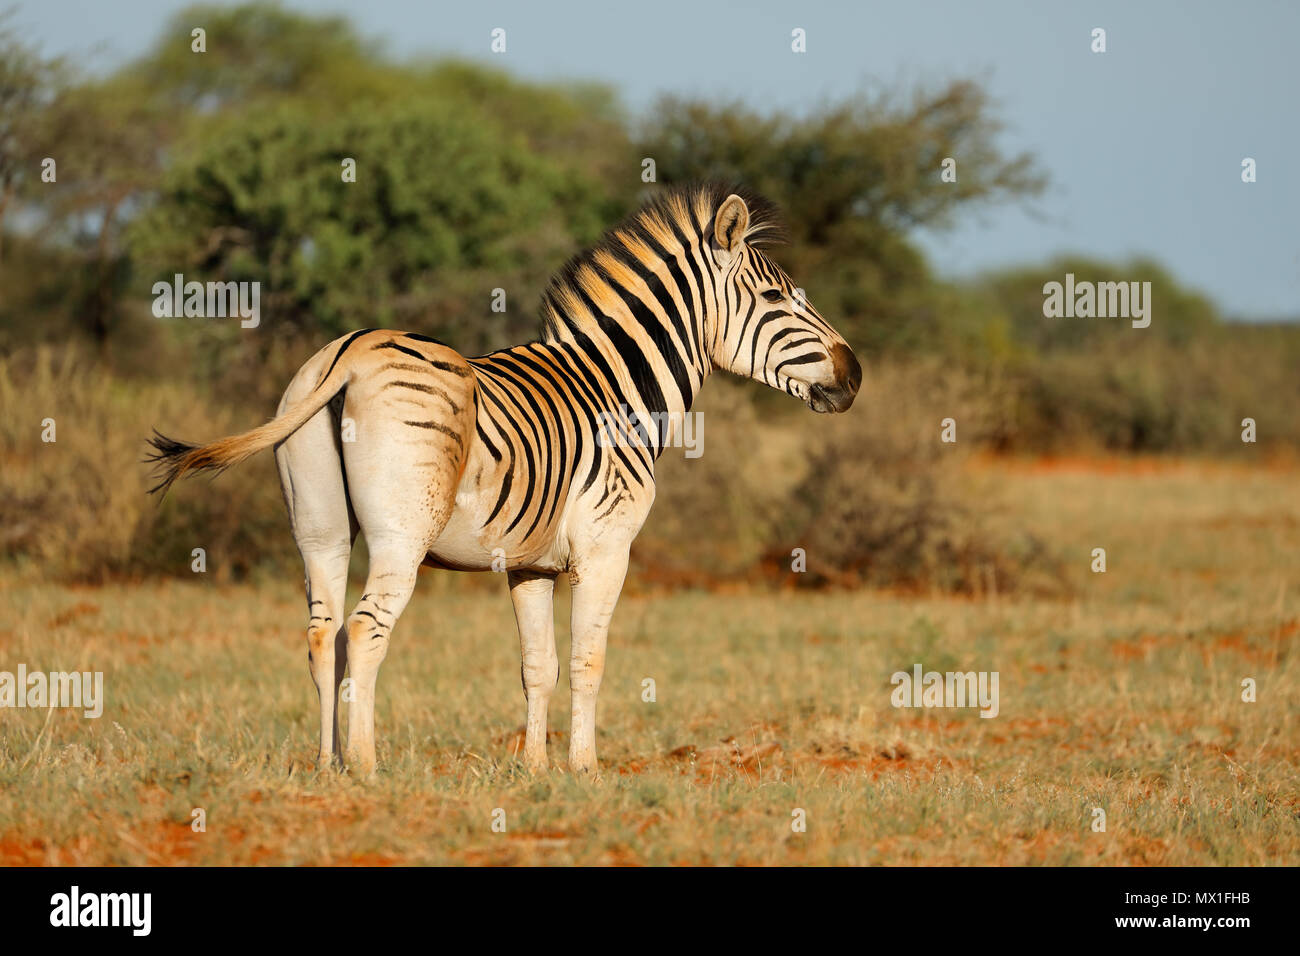 A plains zebra (Equus burchelli) in natural habitat, South Africa Stock Photo